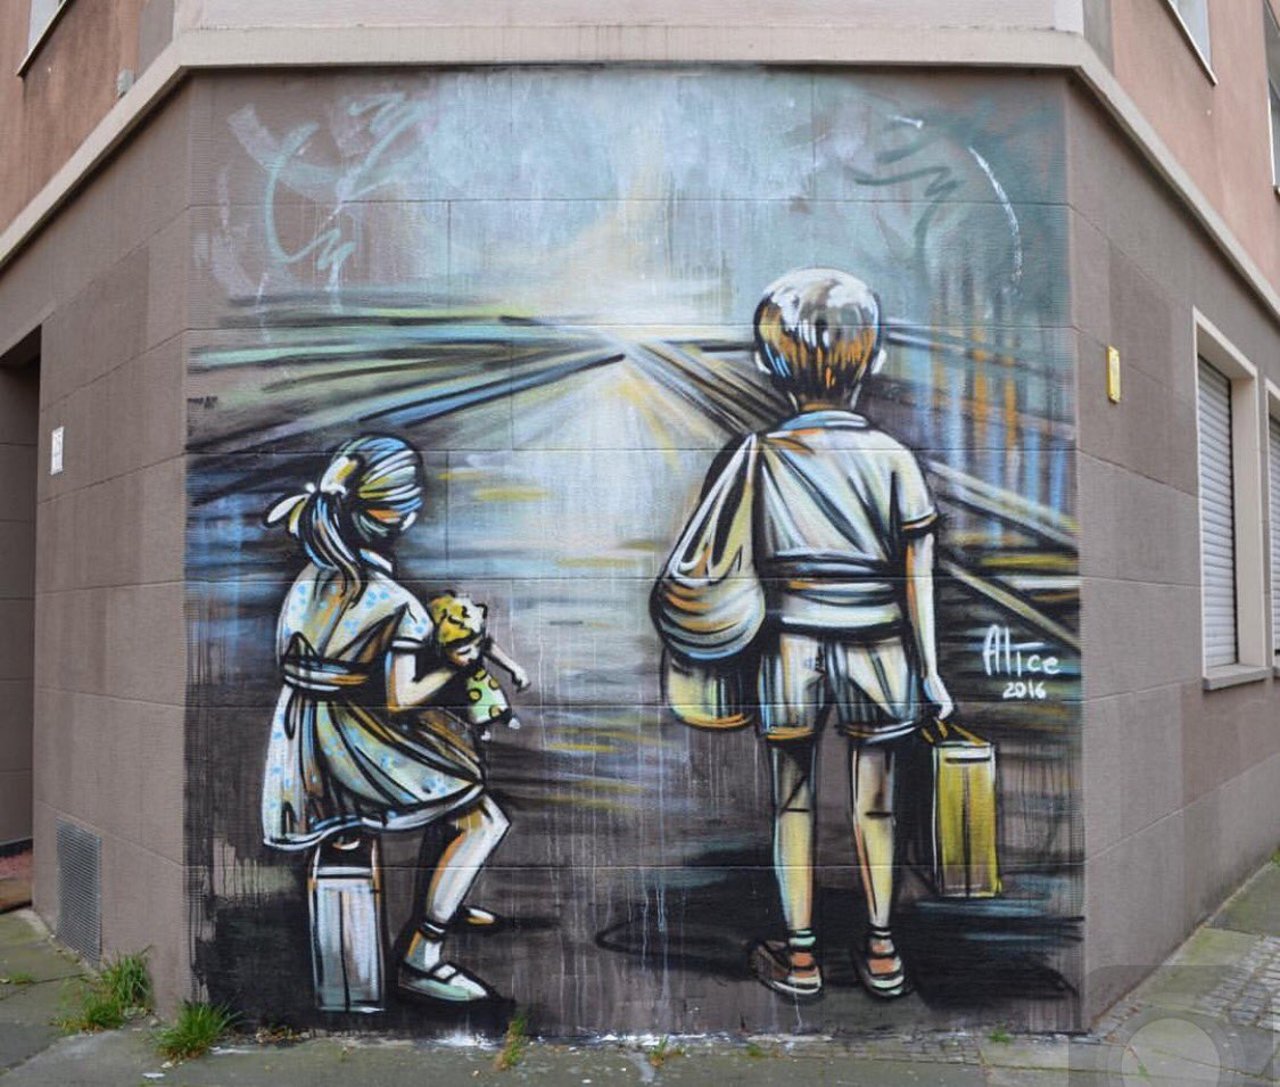 #switch #streetart by #alicepasquini in #germany #graffiti #art #arte #bedifferent https://t.co/rIhdcjdzqp